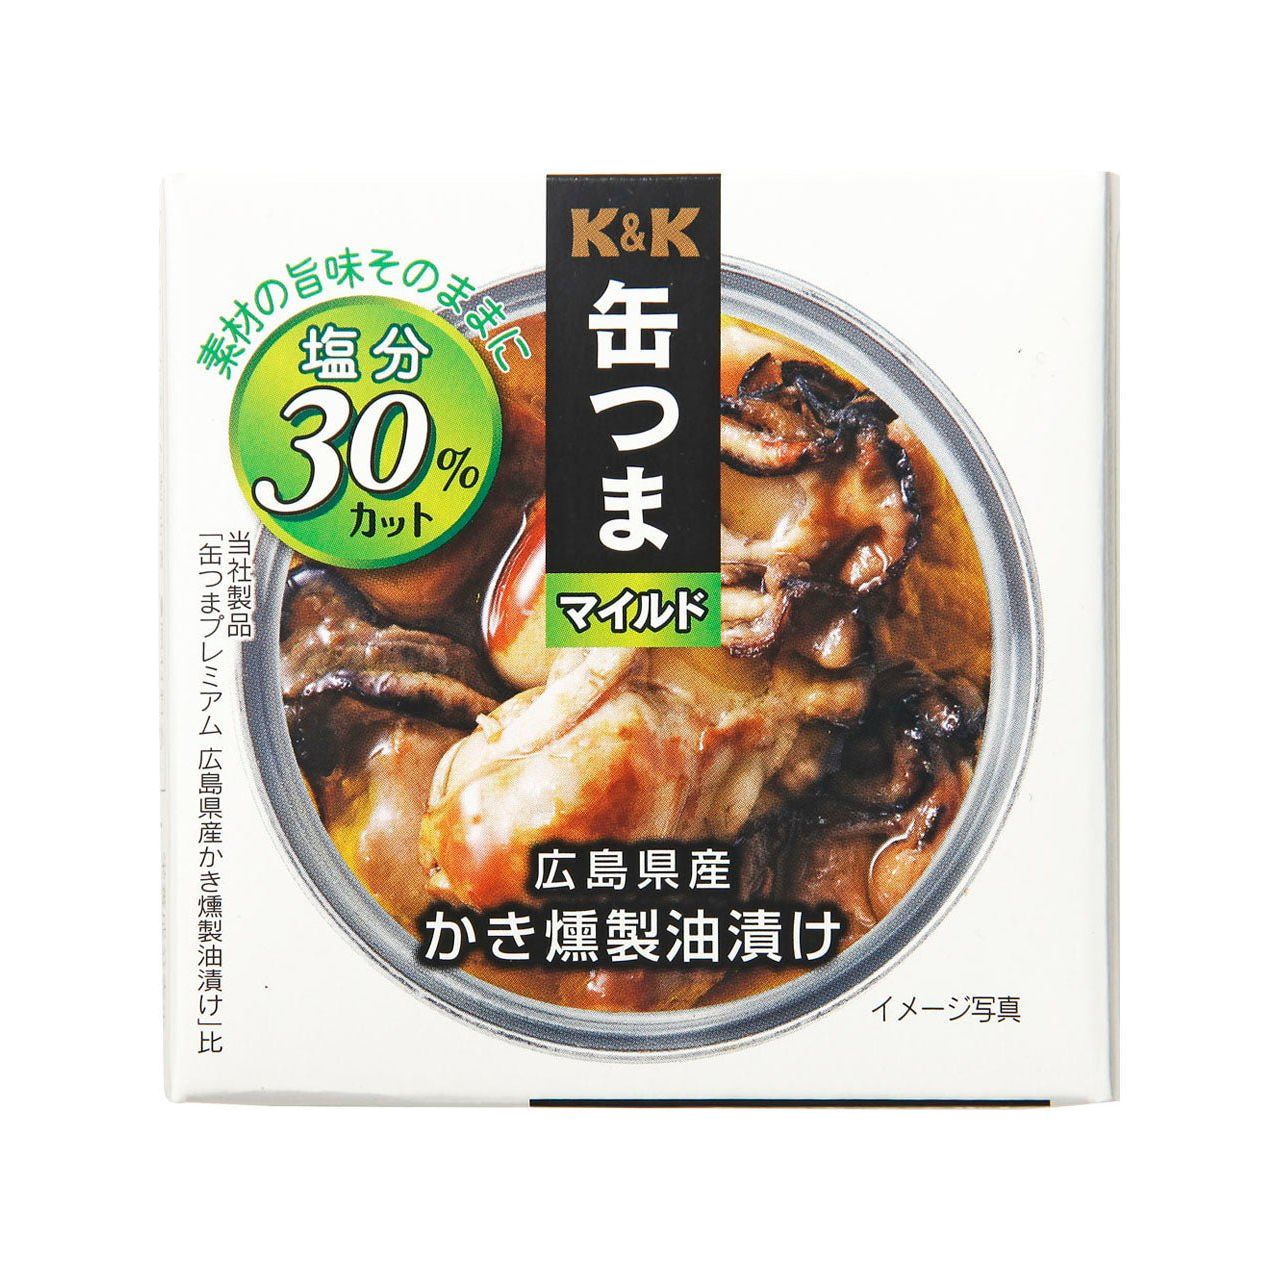 K&K CAN Tsuma Milde Pemporáne Pemporáne Aceite en escabeche de la prefectura de Hiroshima